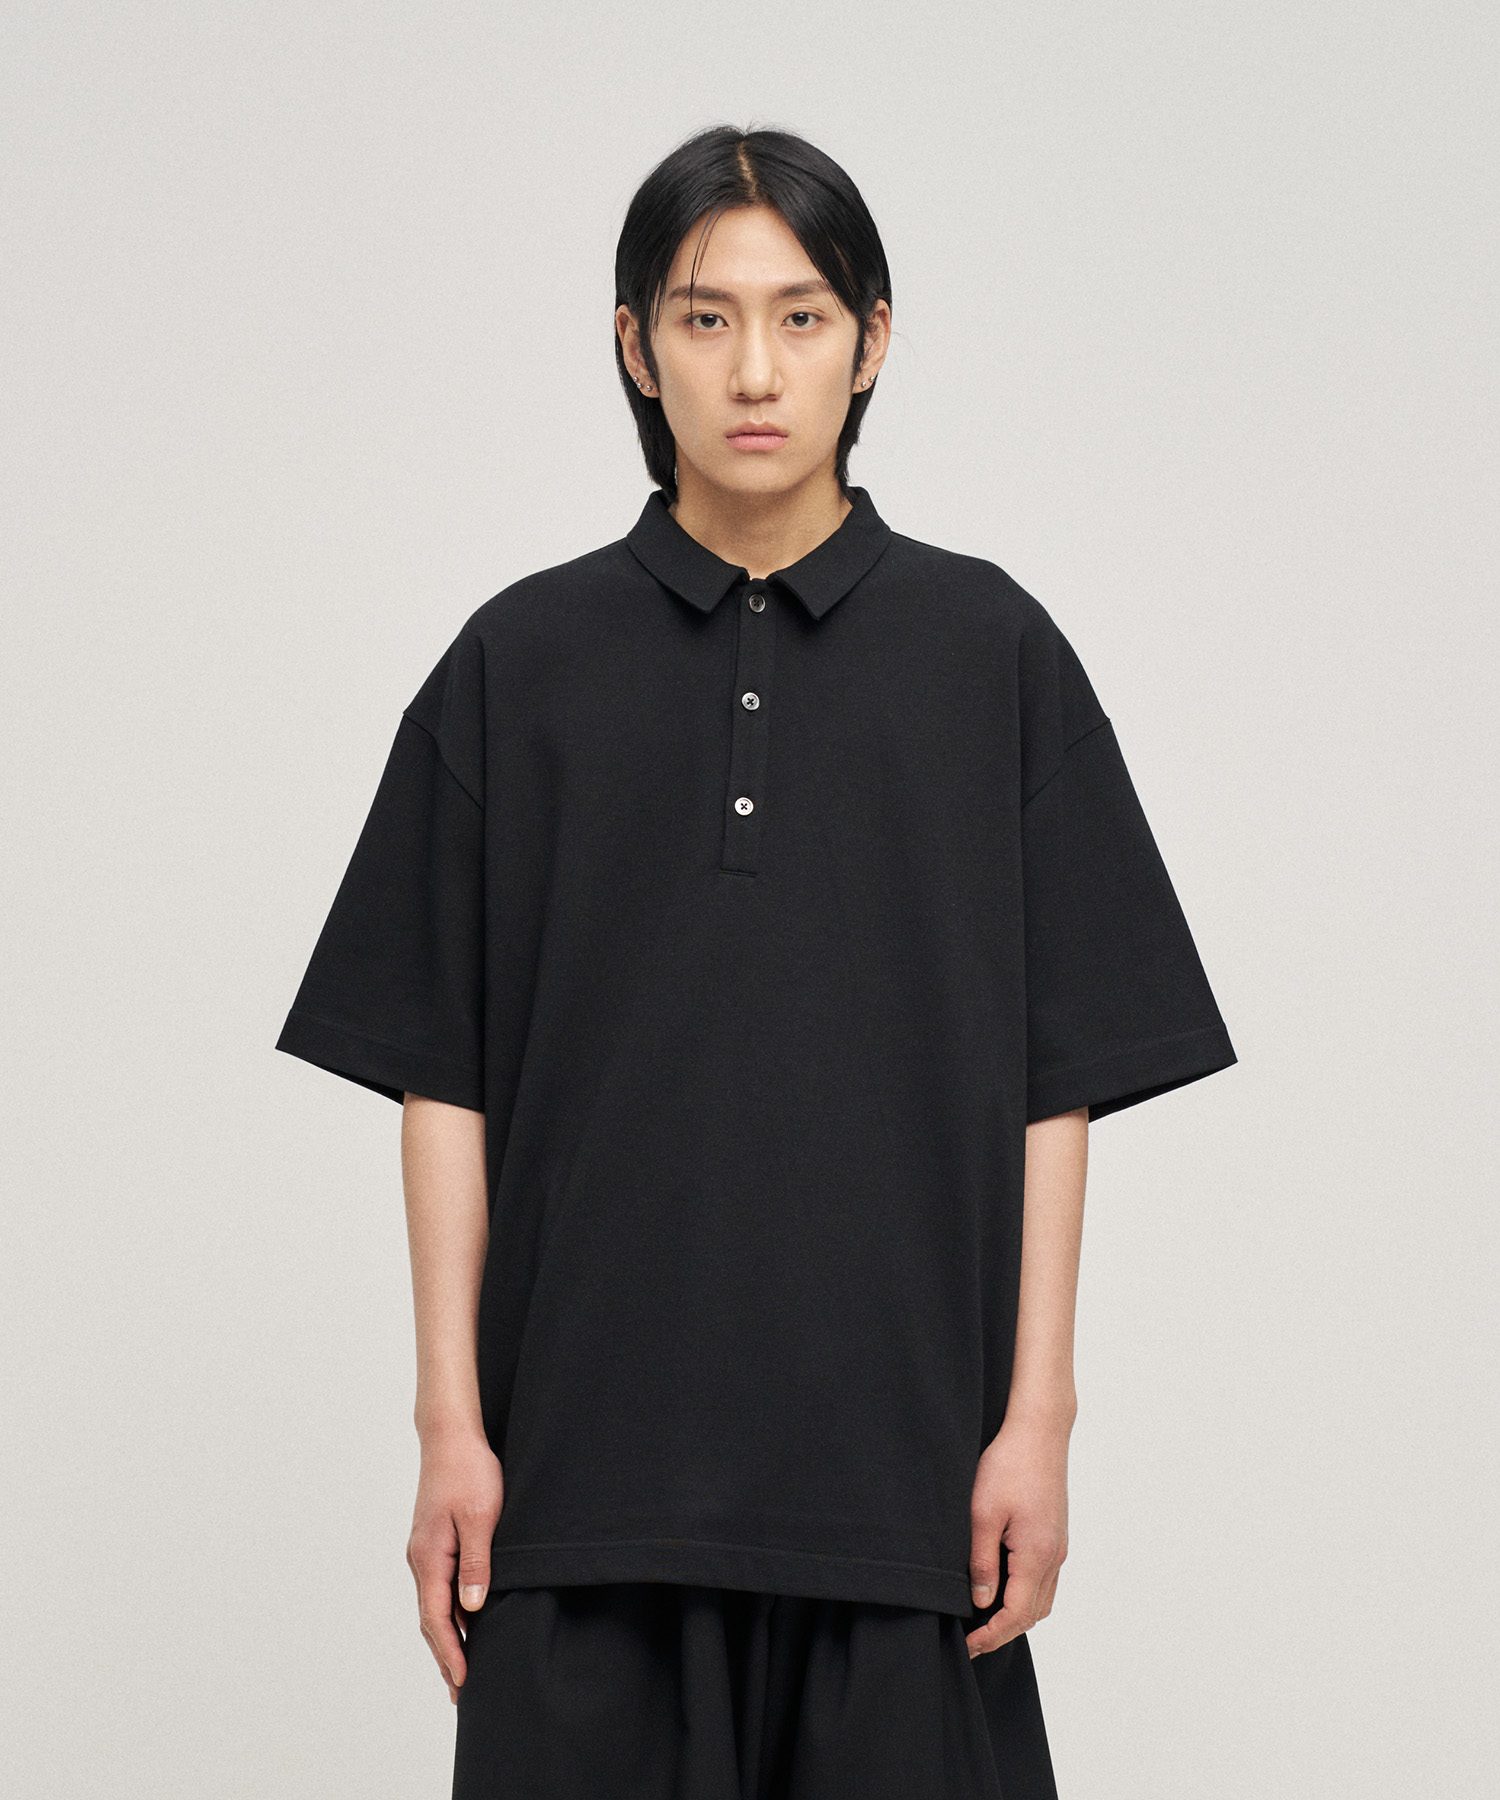 Recycled Suvin High-Twist Yarn Poloshirt (Black)